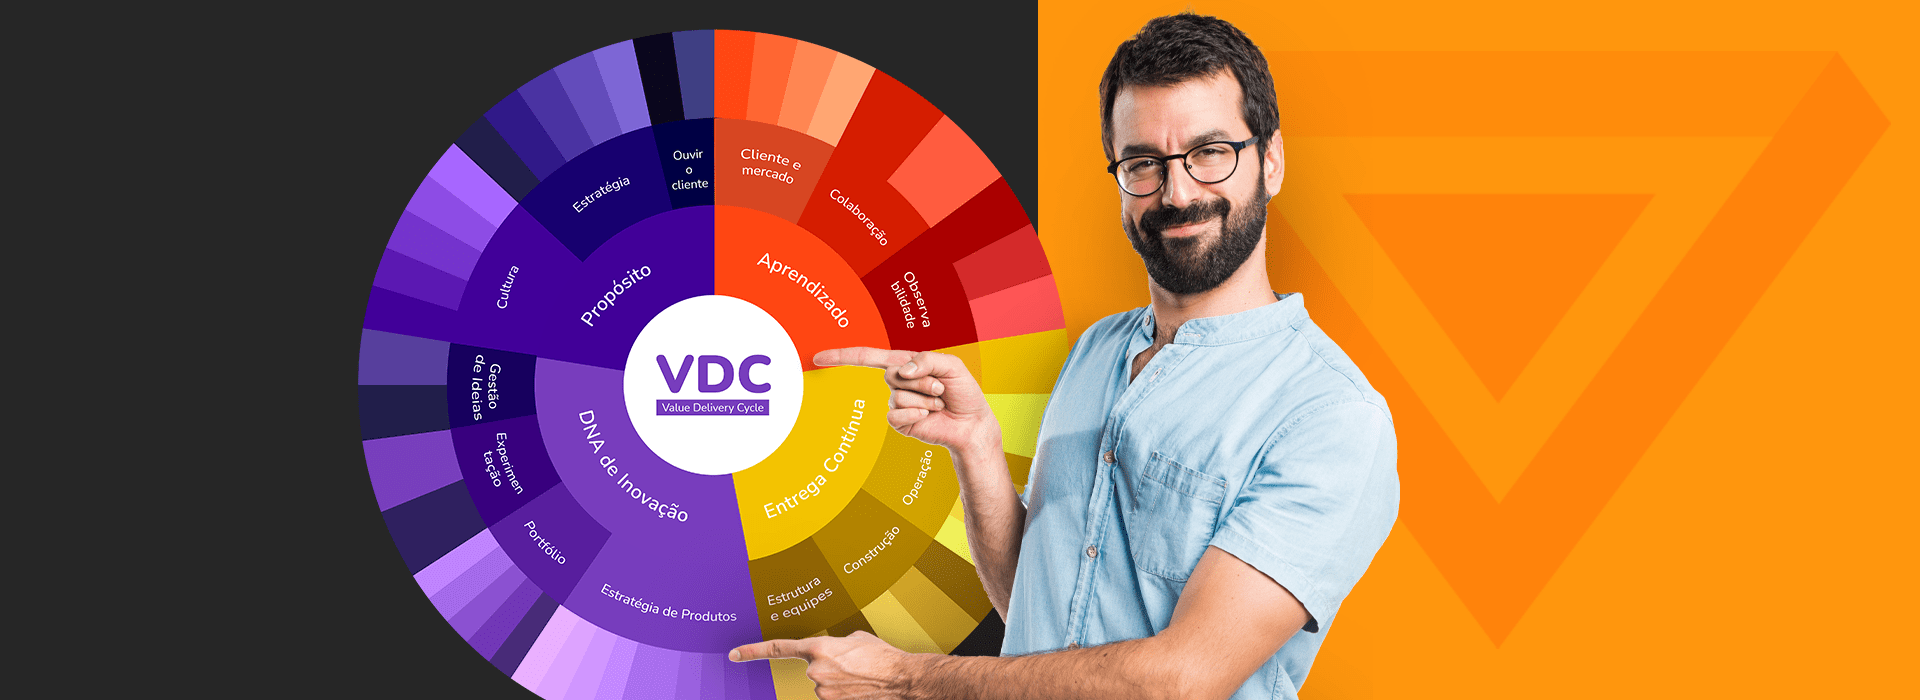 VDC – Value Delivery Cycle: acelere sua empresa